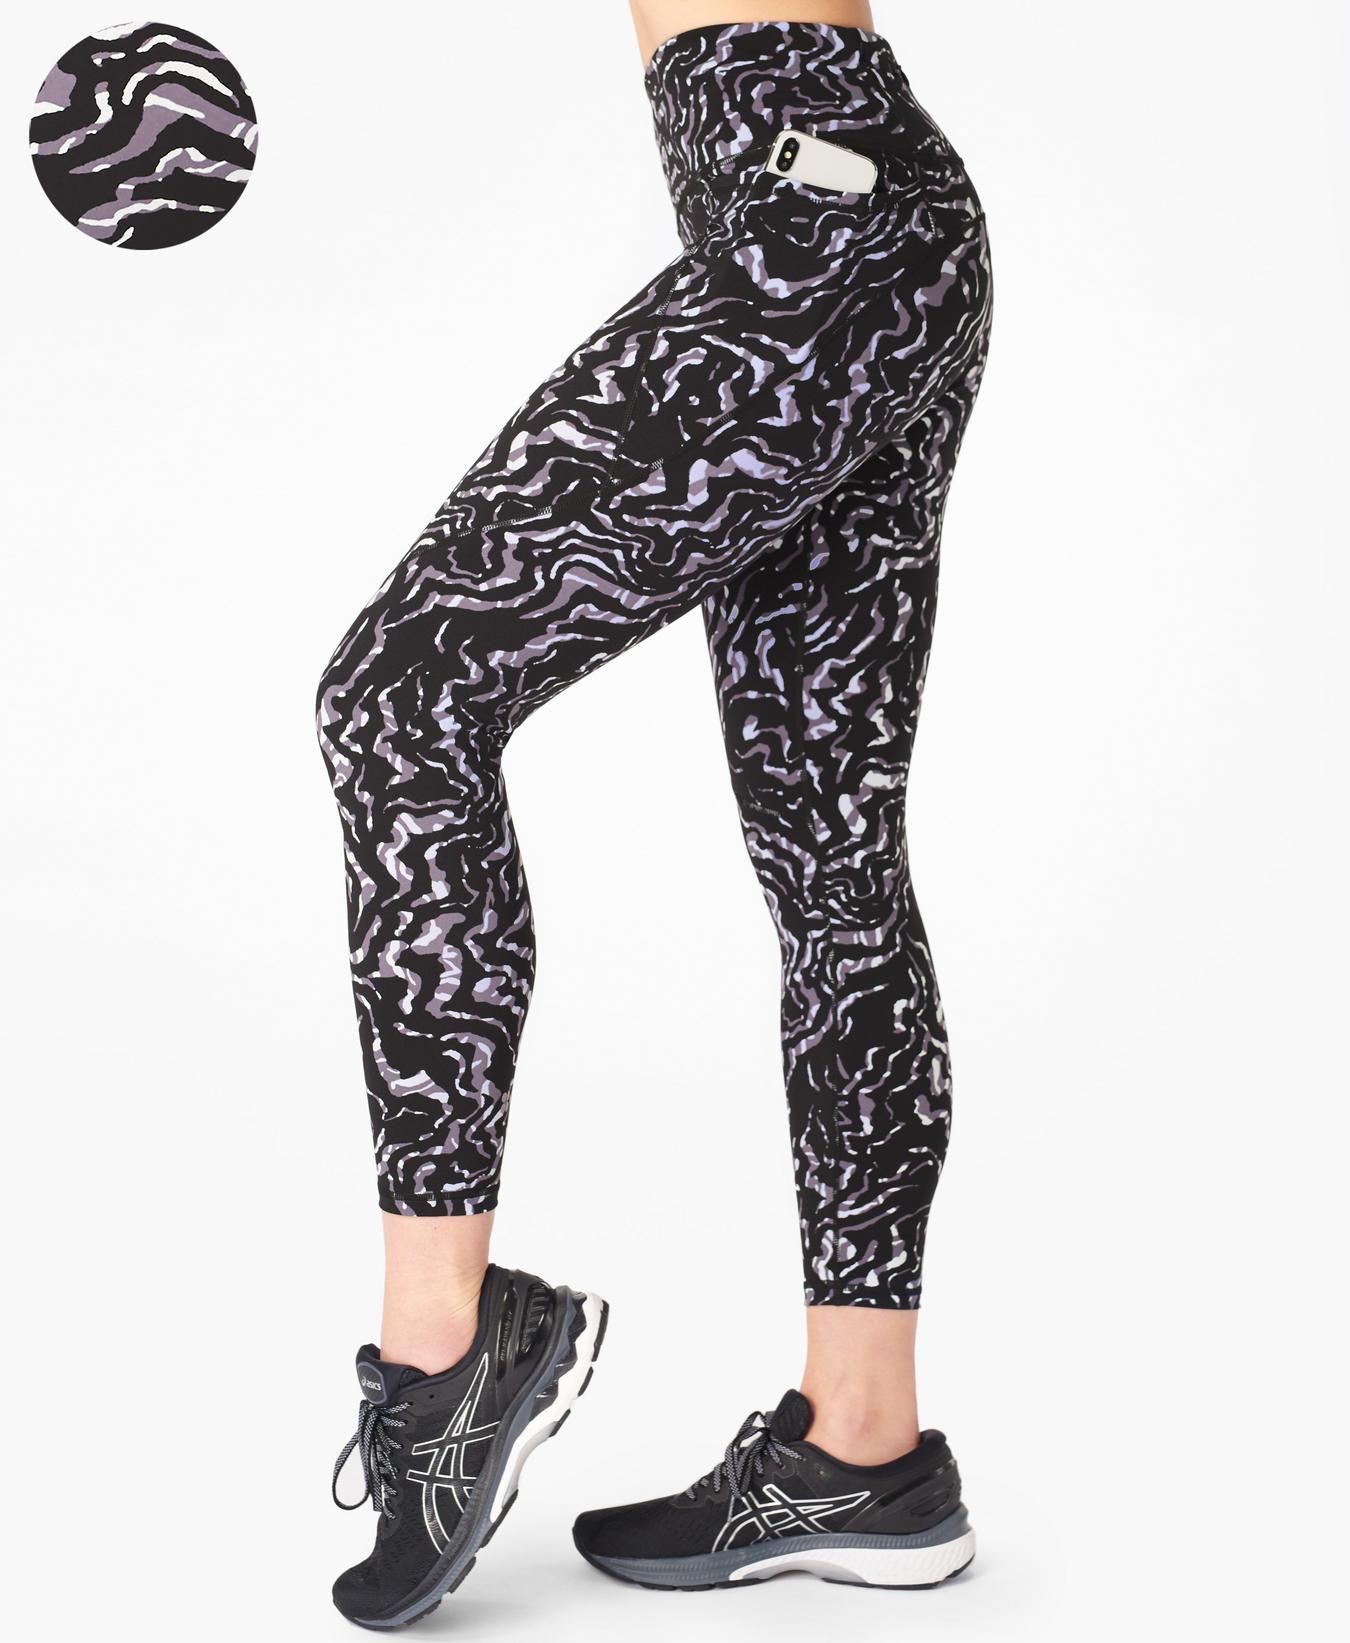 nike patterned gym leggings